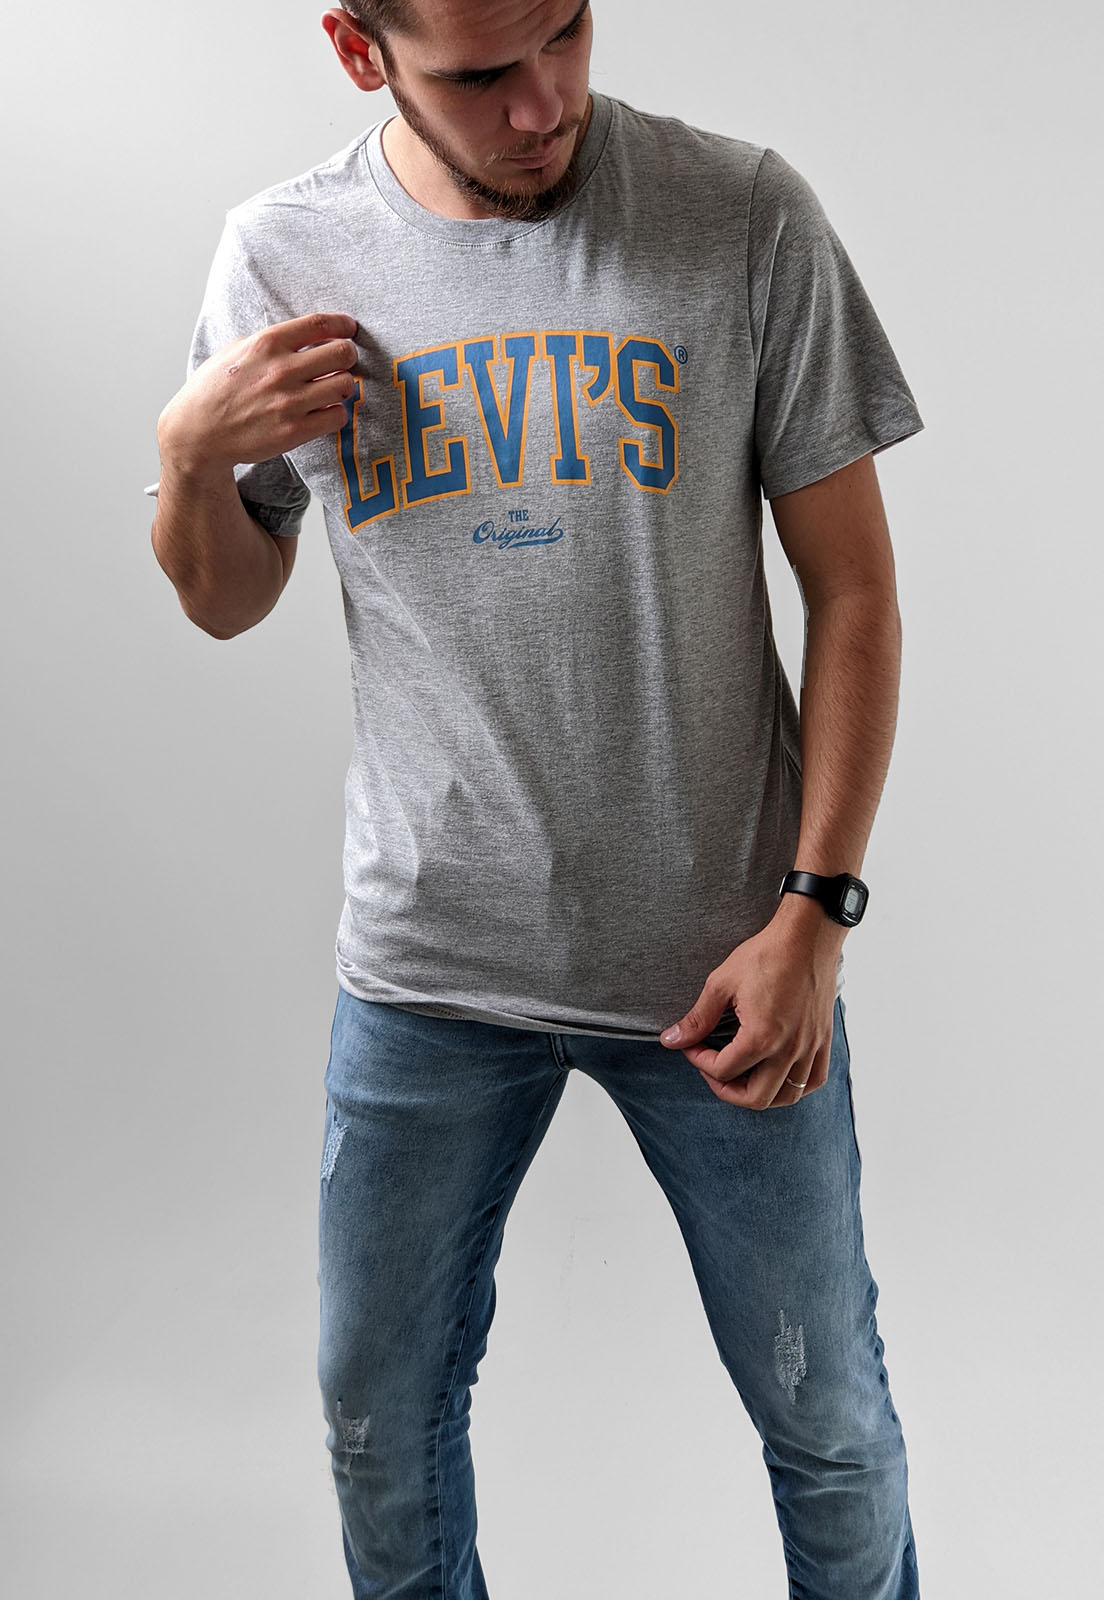 Camiseta Levi's Cinza Mescla Colege